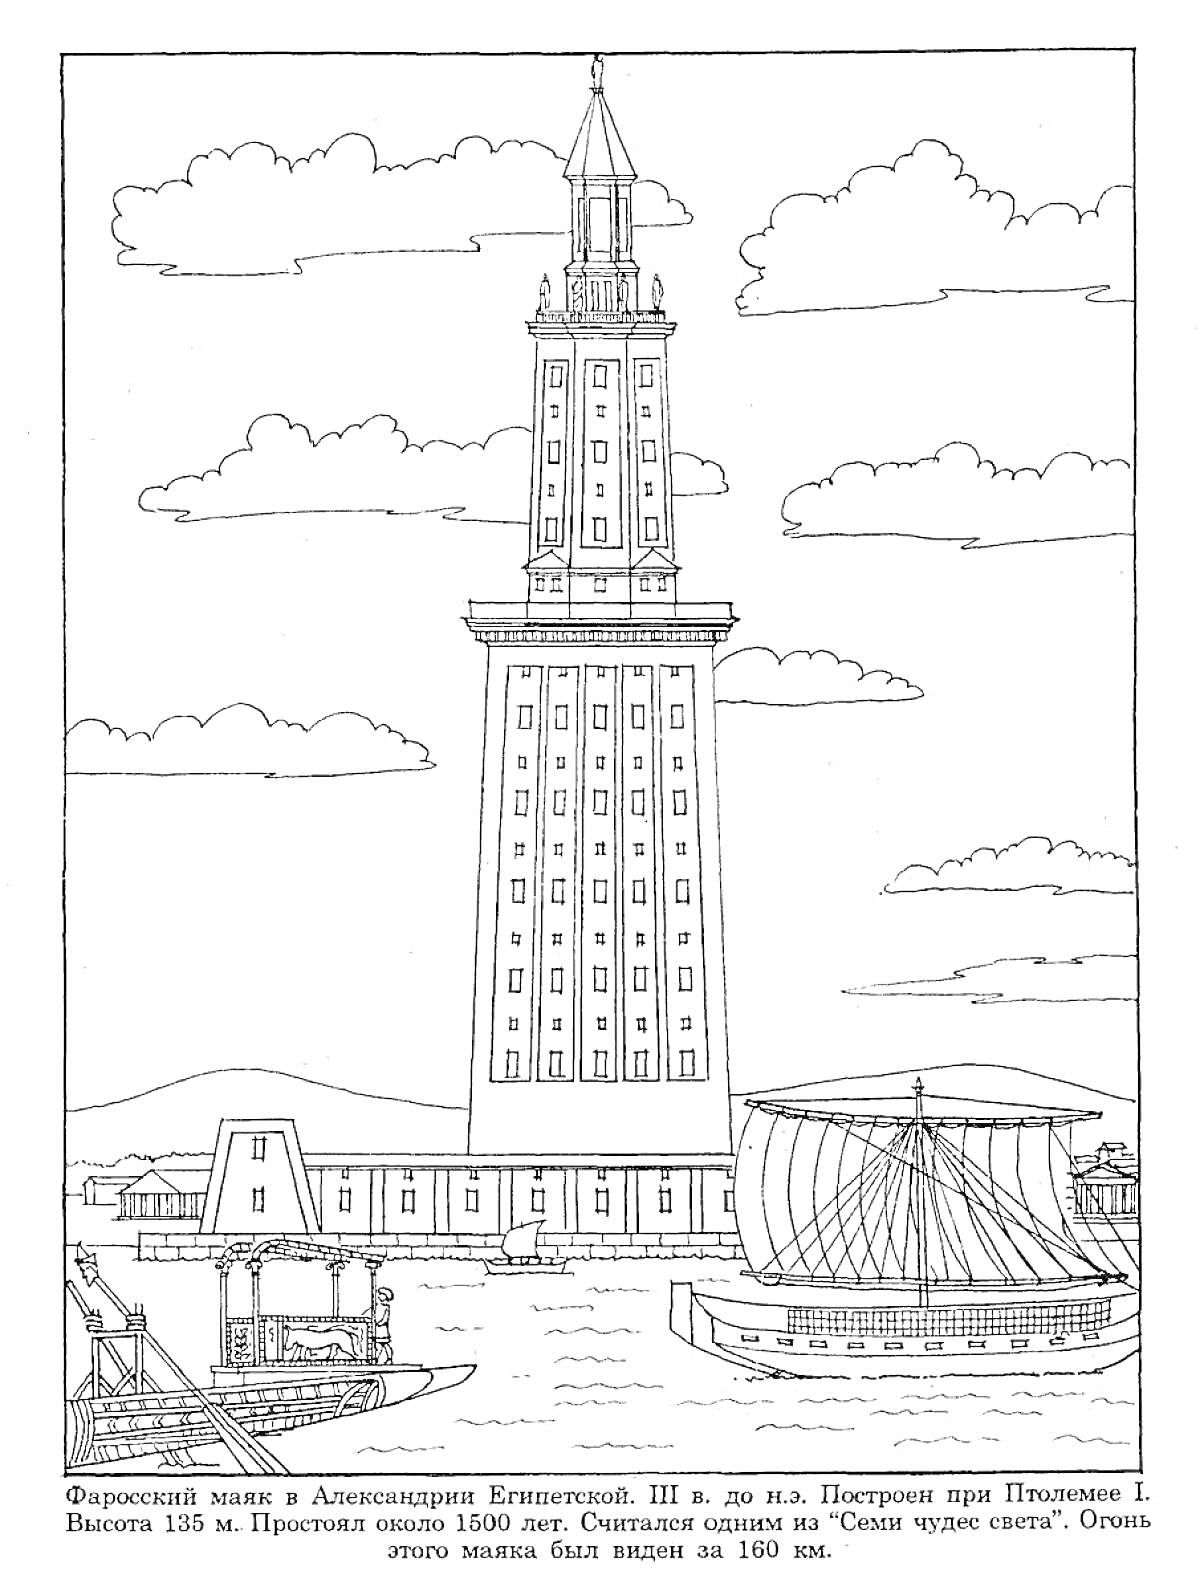 РаскраскаФаросский маяк в Александрии с окружающими кораблями на причале и лодкой на переднем плане.